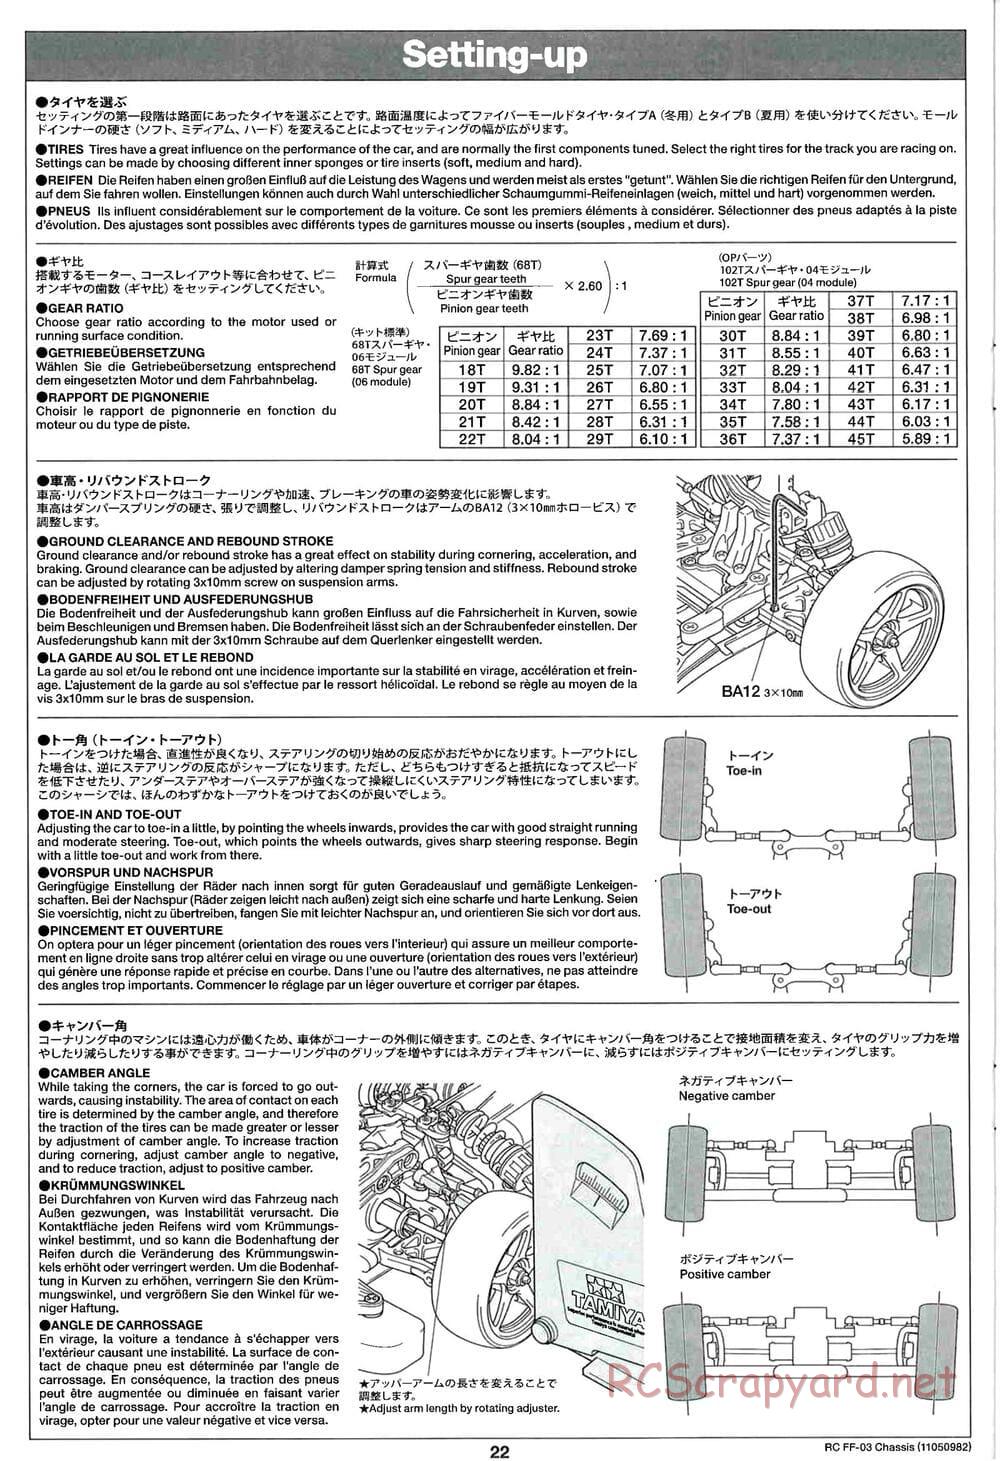 Tamiya - FF-03 Chassis - Manual - Page 22